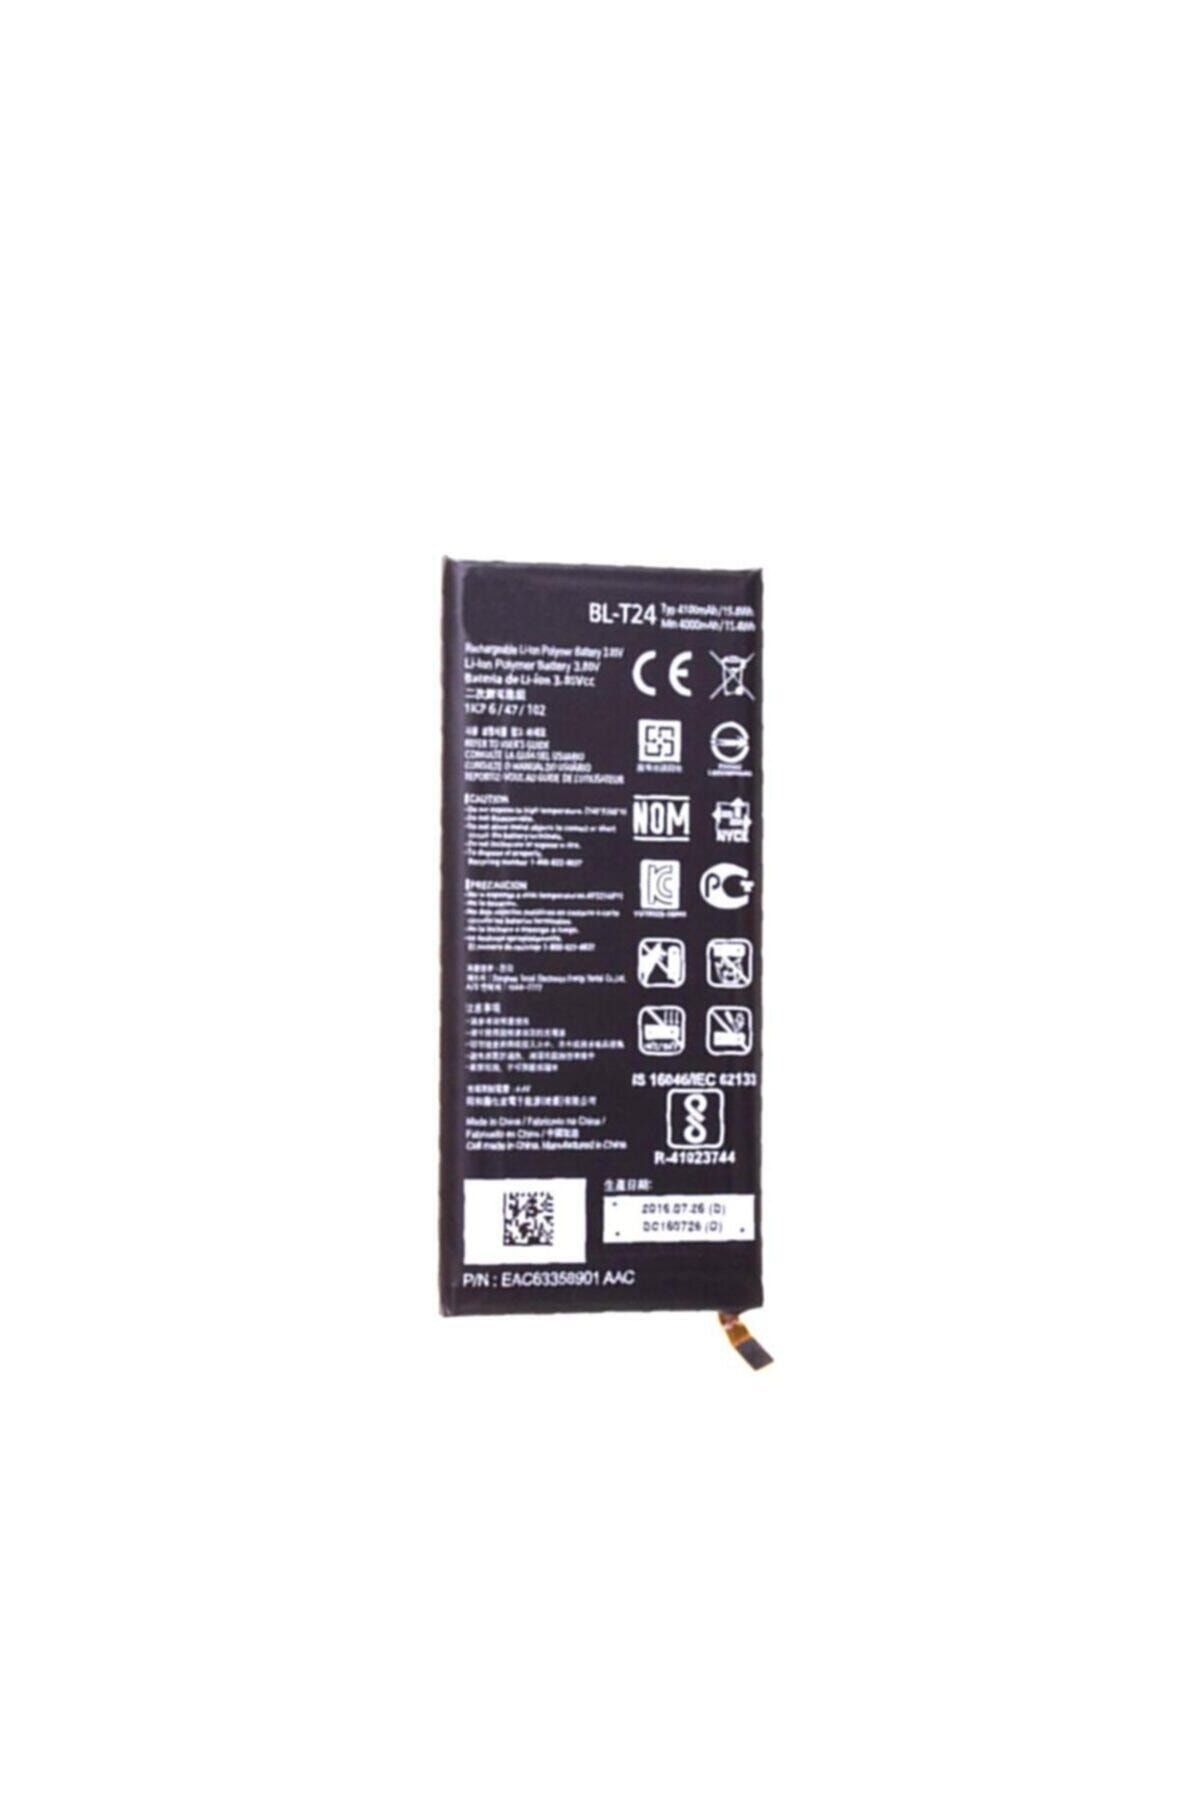 LG X Power Bl-t24 K220 Batarya Pil A++ Lityum Polimer Pil